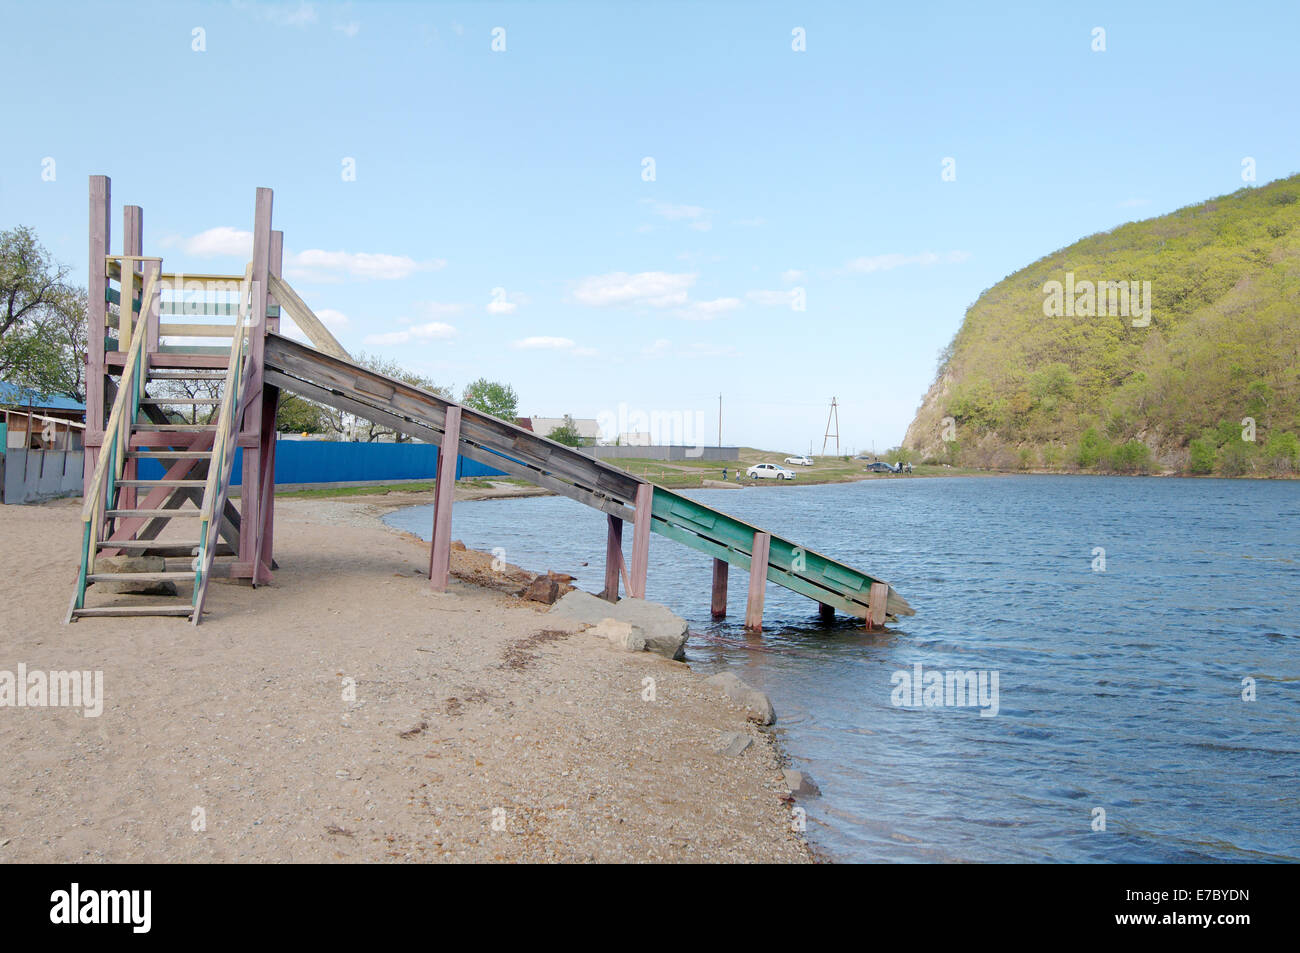 Toboggan de jeu en bois, lac Schuchie (eng. Pike Lake), Rudnaya Pristan, Primorye, Extrême-Orient, Russie Banque D'Images